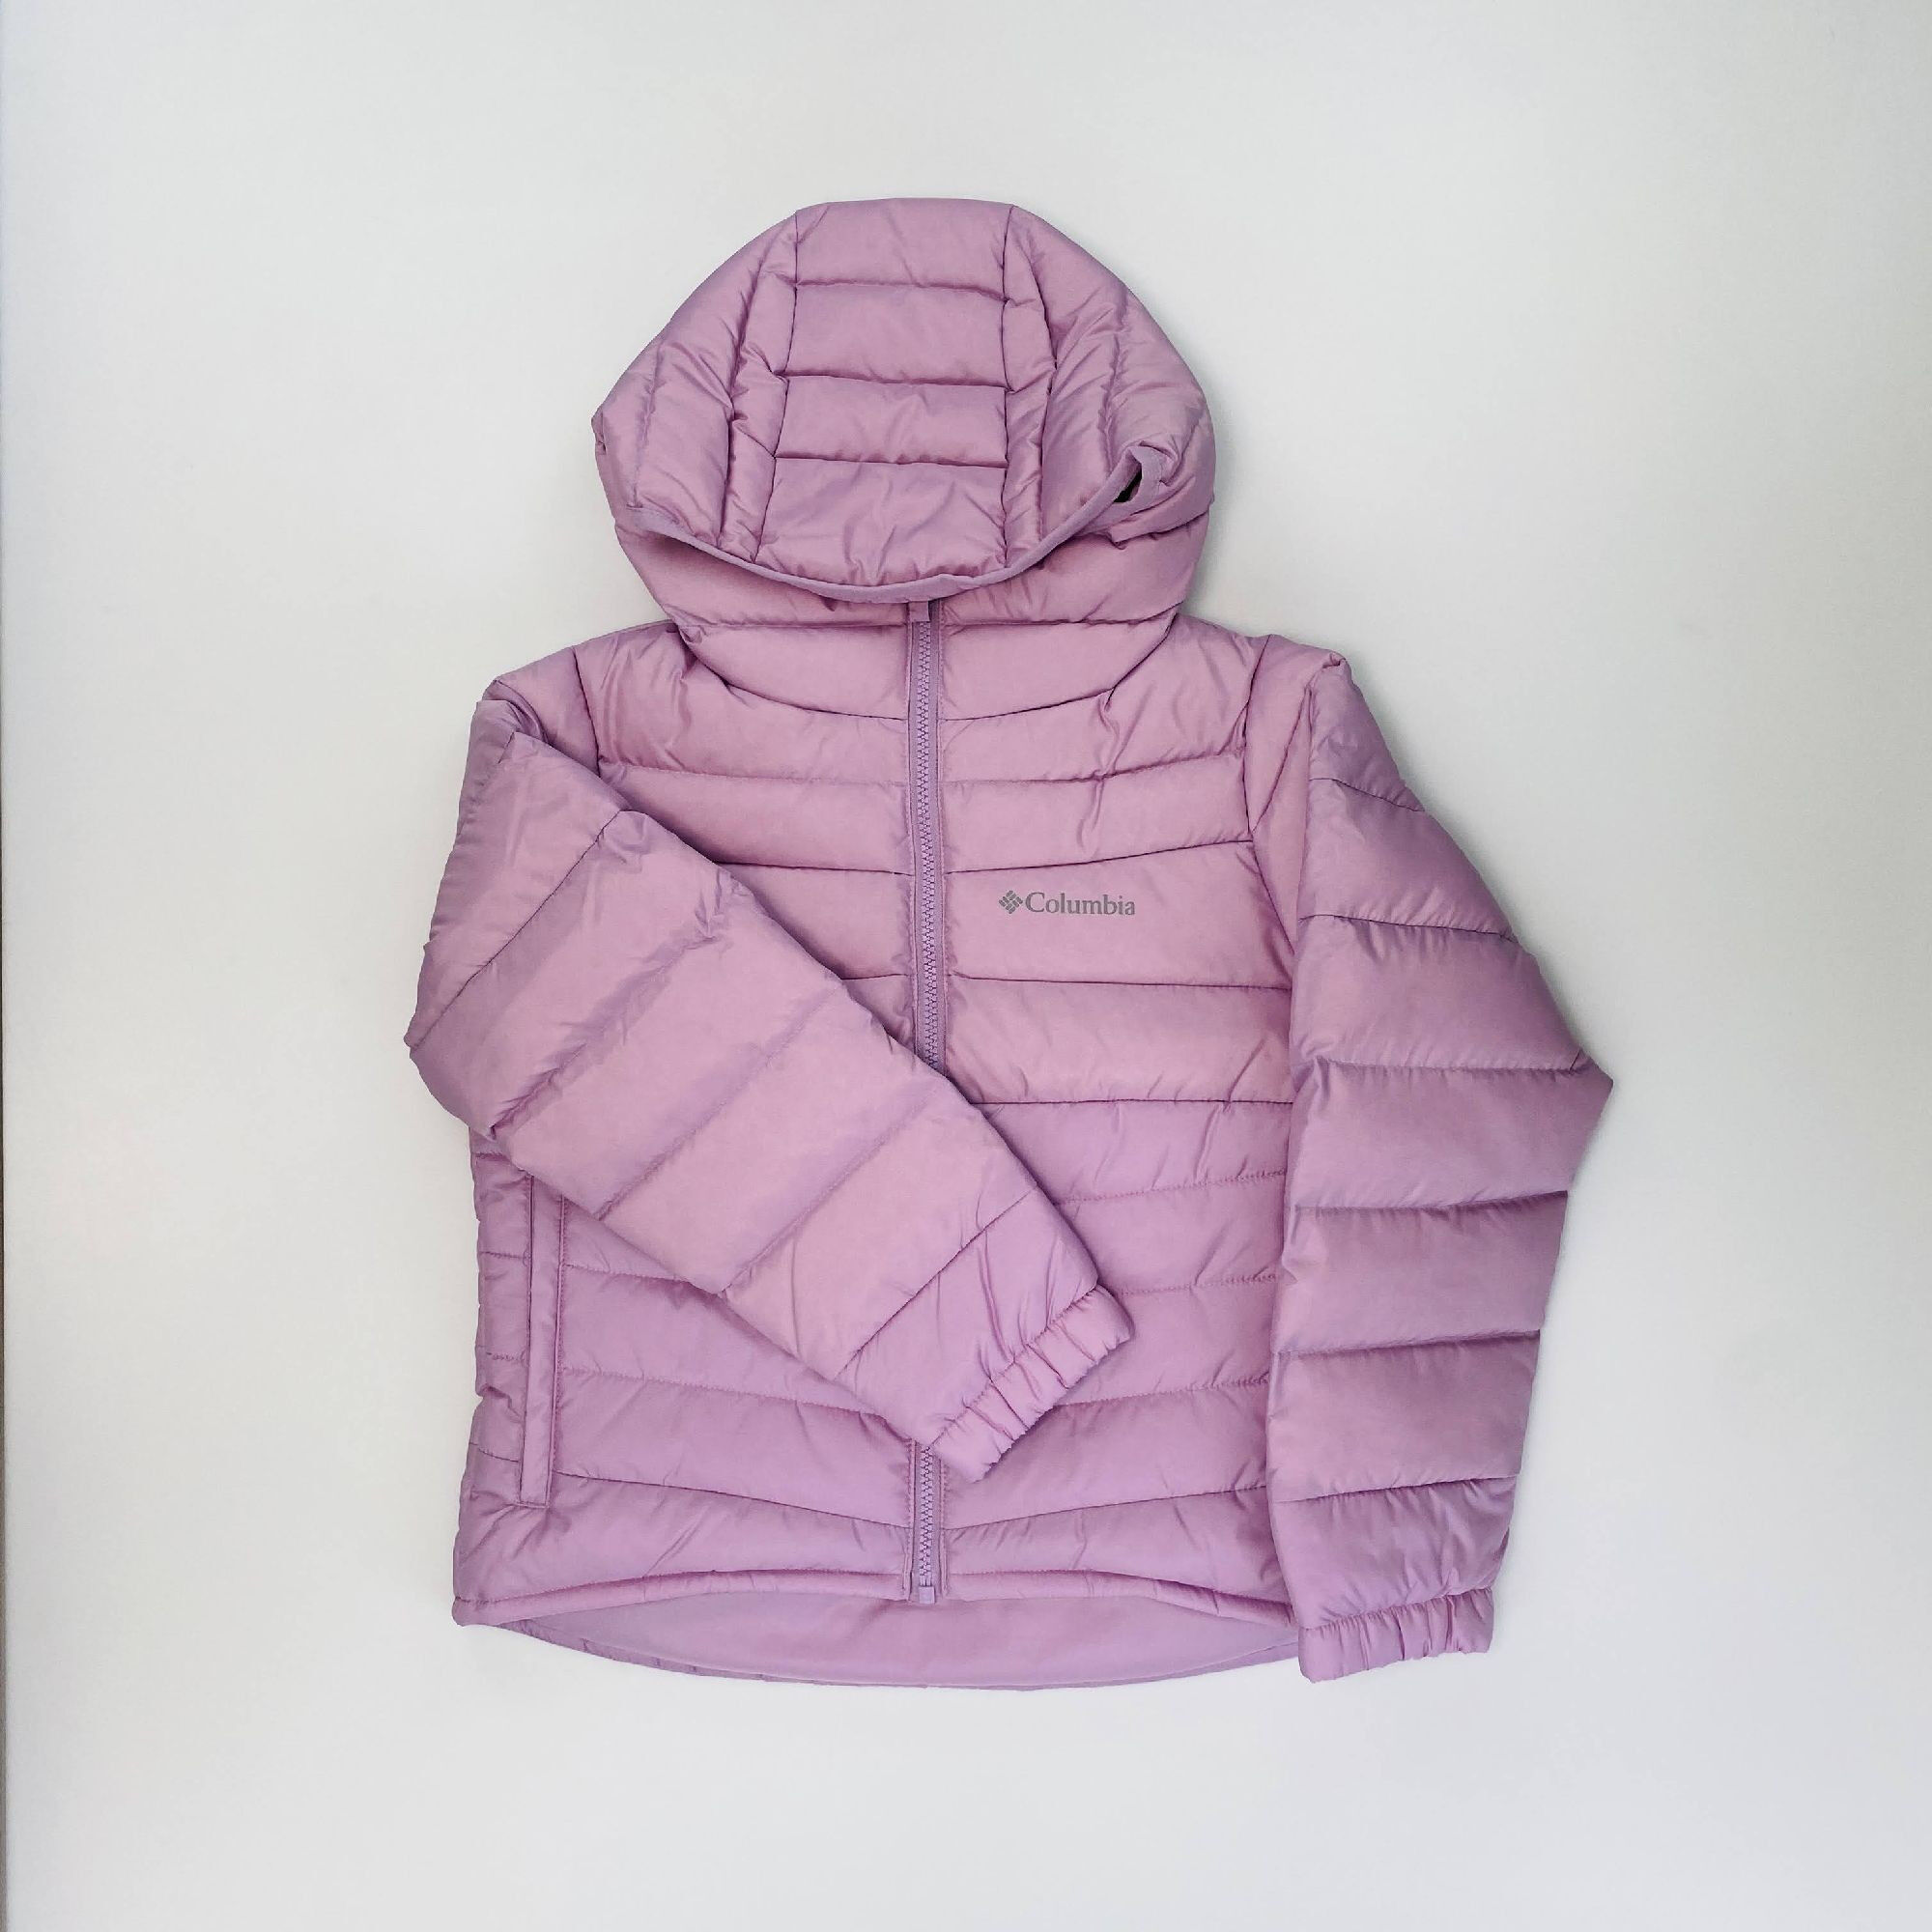 Columbia Tumble Rock™ Down Hooded Jacket - Giacca sintetica di seconda mano - Bambino - Rosa - S | Hardloop